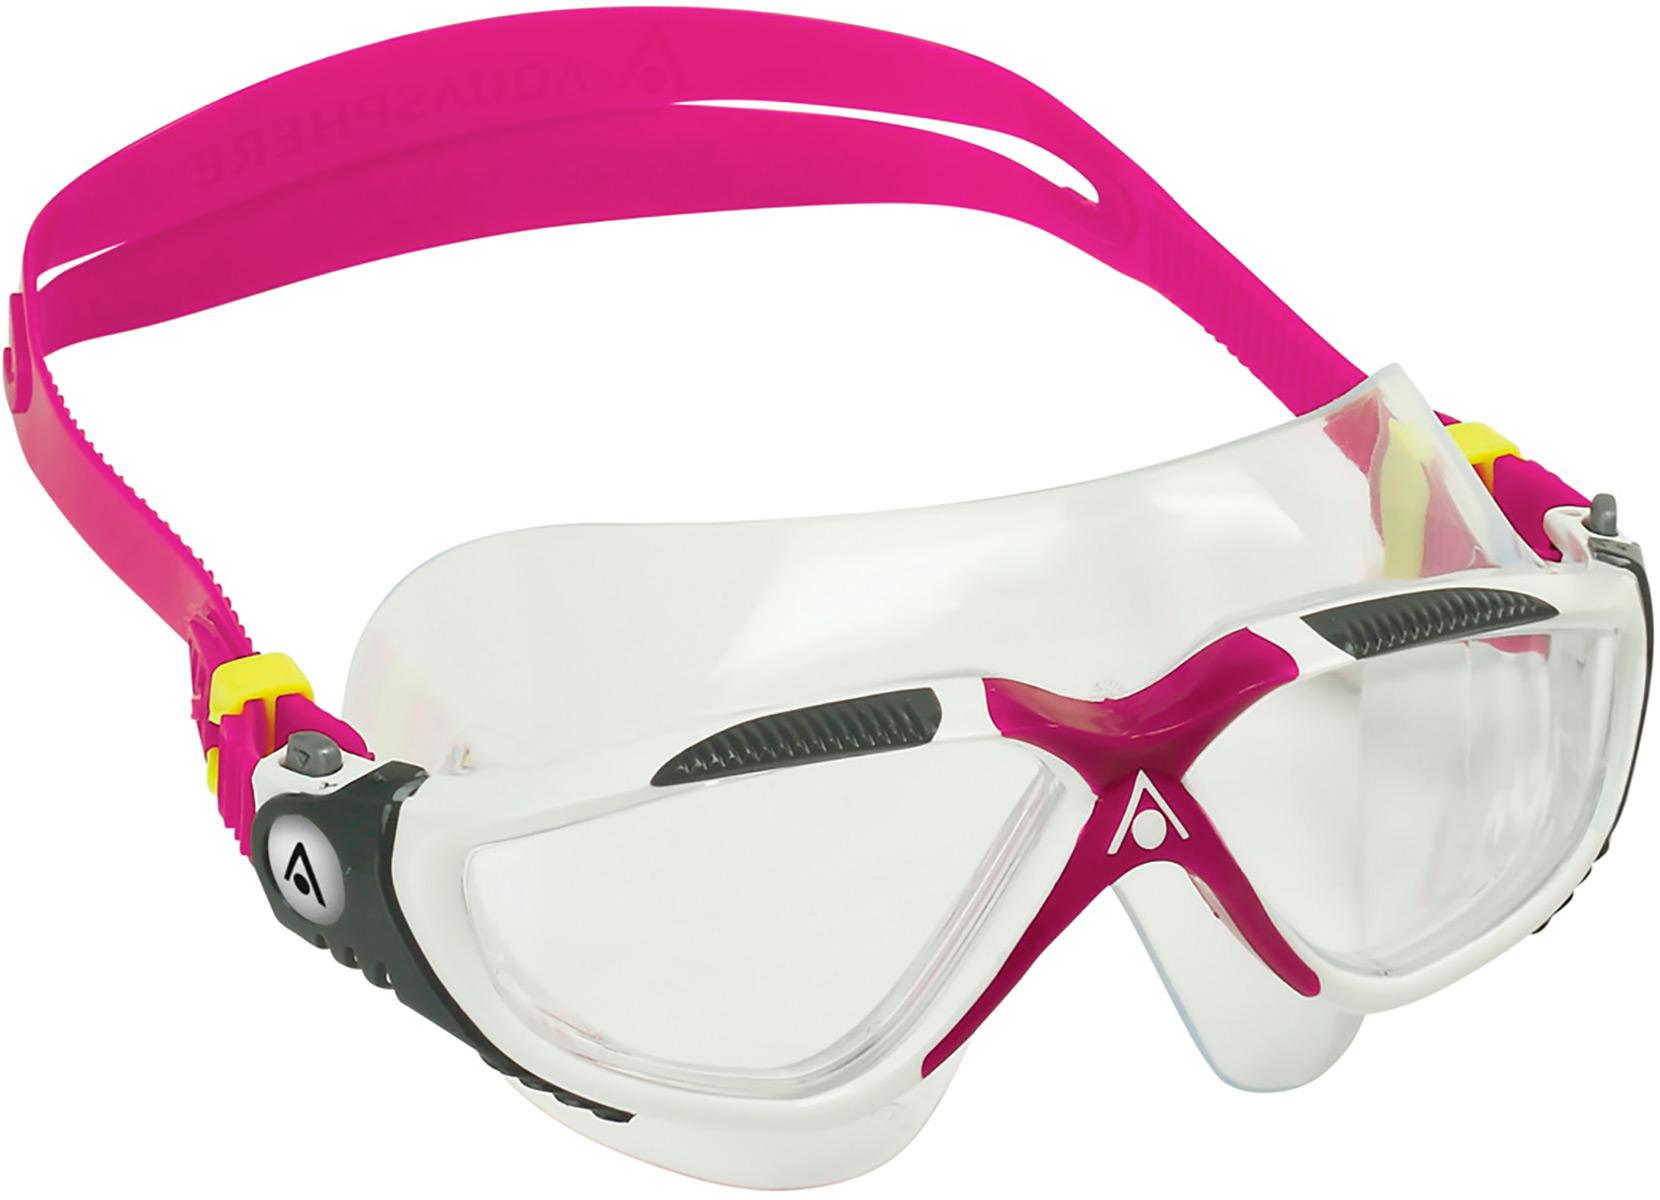 Aqua Sphere Vista Goggles Clear Lens - White/raspberry/clear